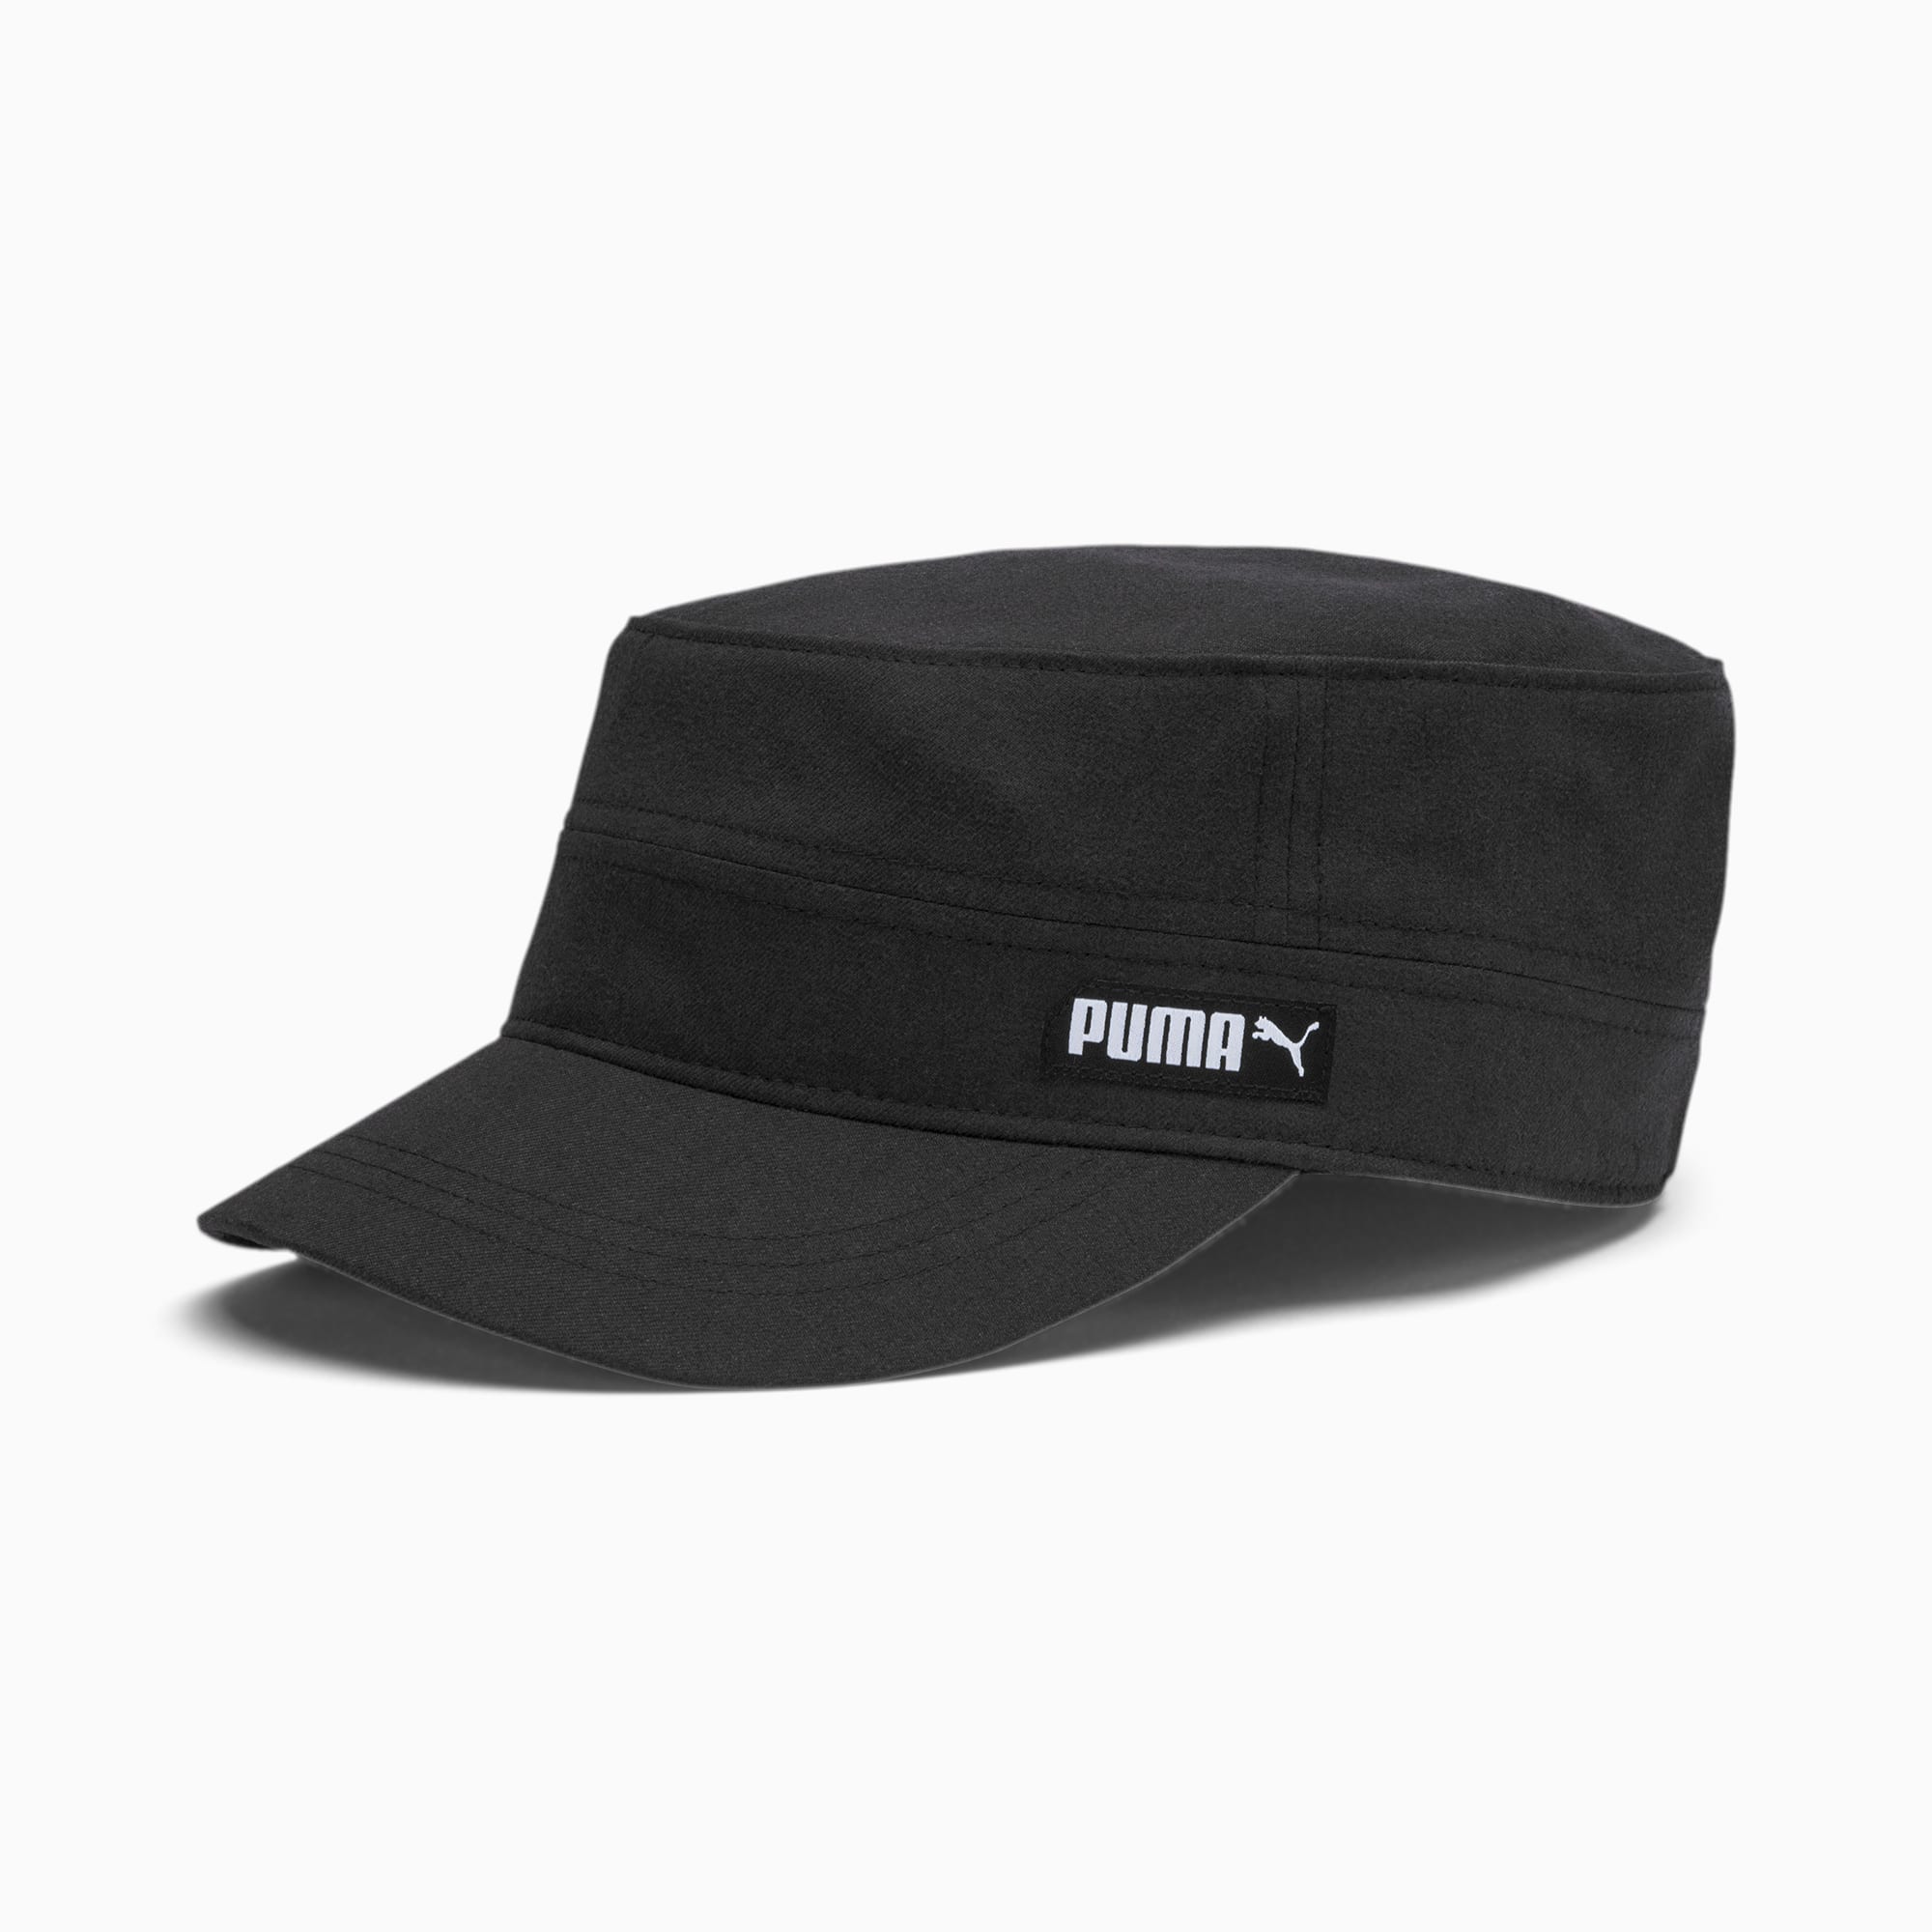 puma military hat